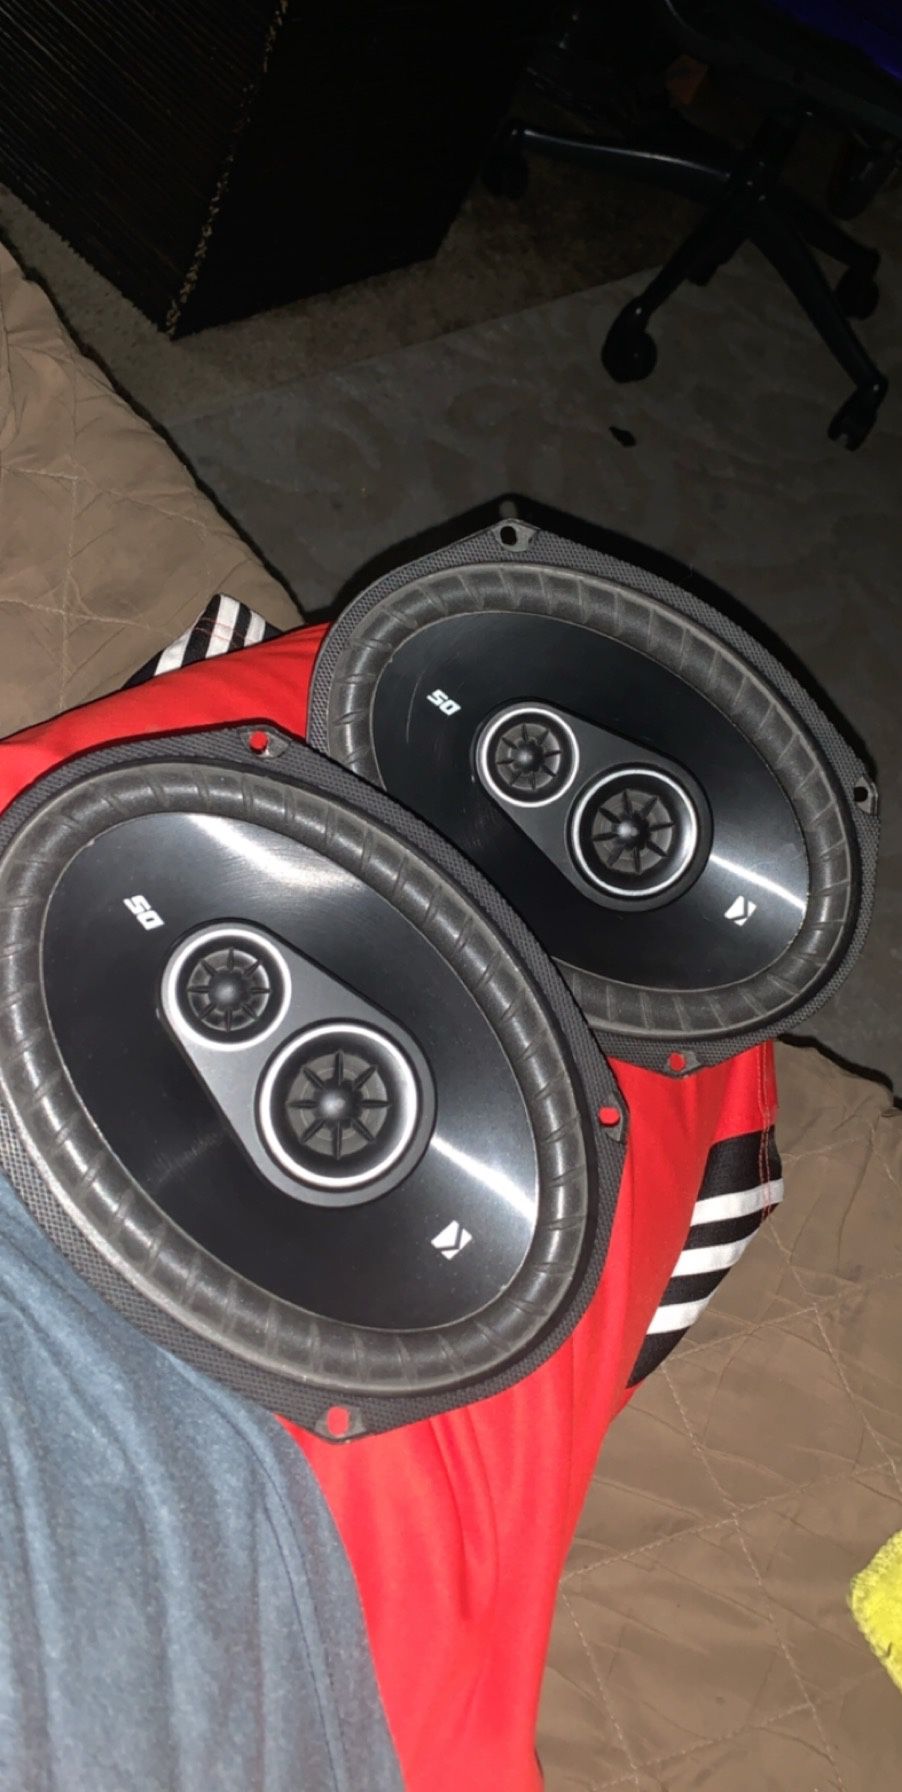 Kicker speakers (Size 6x9” [160x230mm]) 3 ways speaker